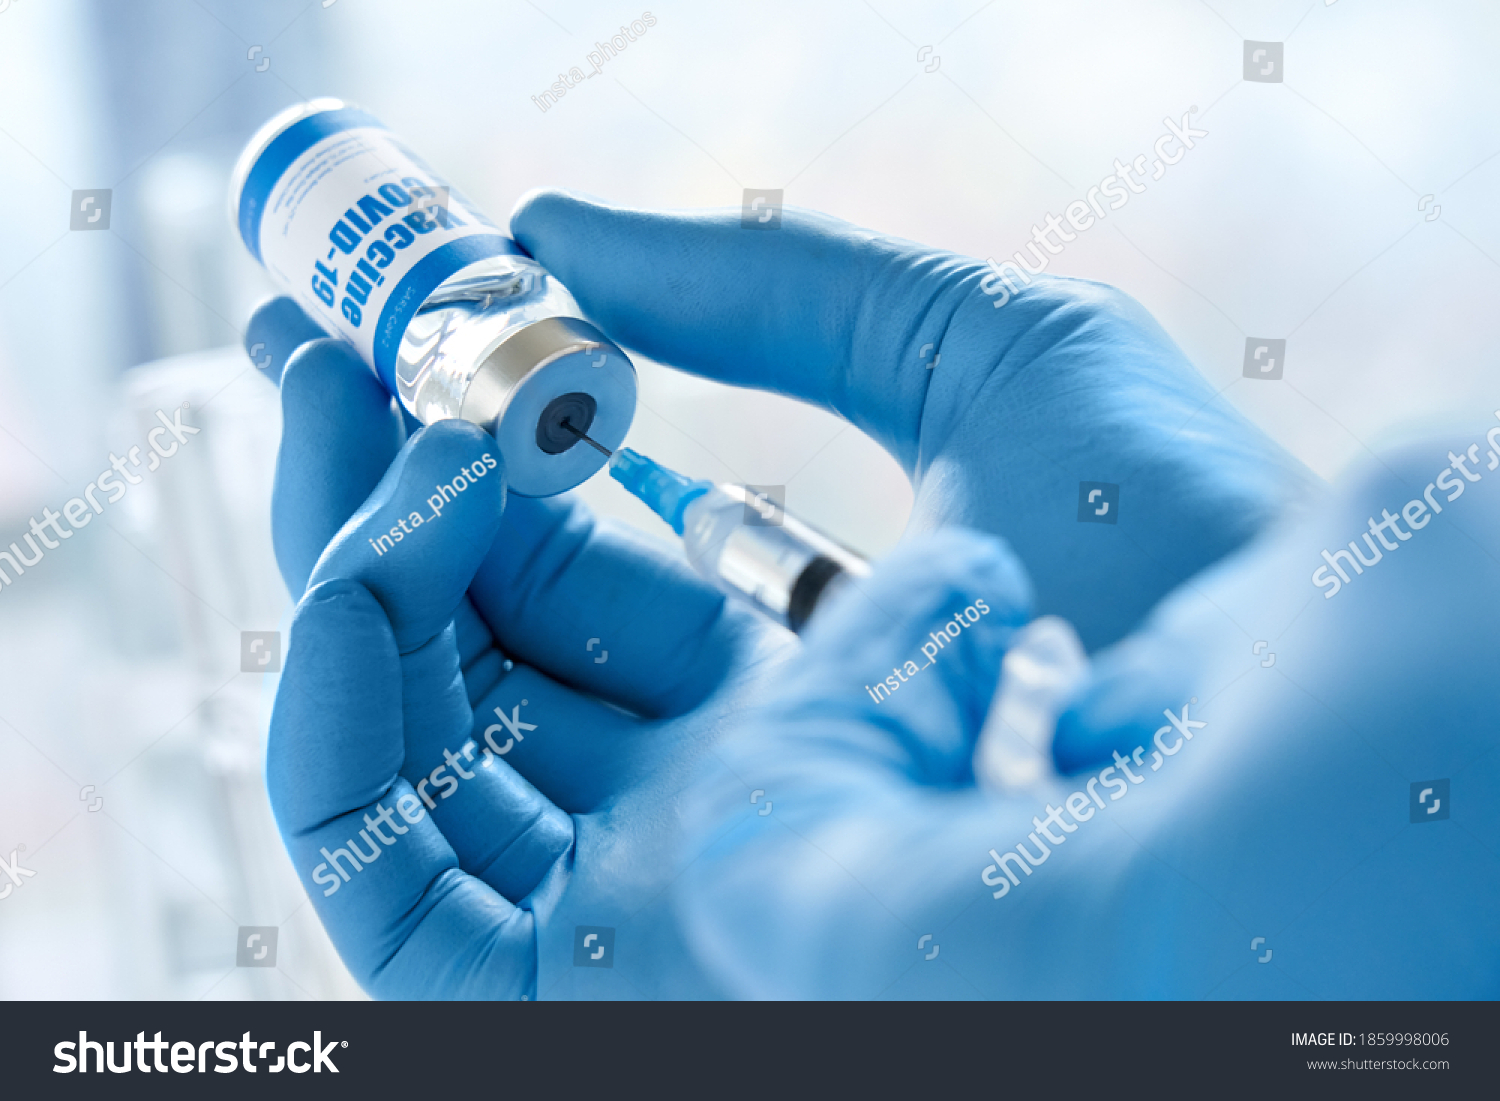 Male doctor hand wears medical glove holding syringe taking covid 19 corona virus liquid vaccine from vial bottle preparing for injections. Coronavirus immunization flu treatment vaccination concept. #1859998006